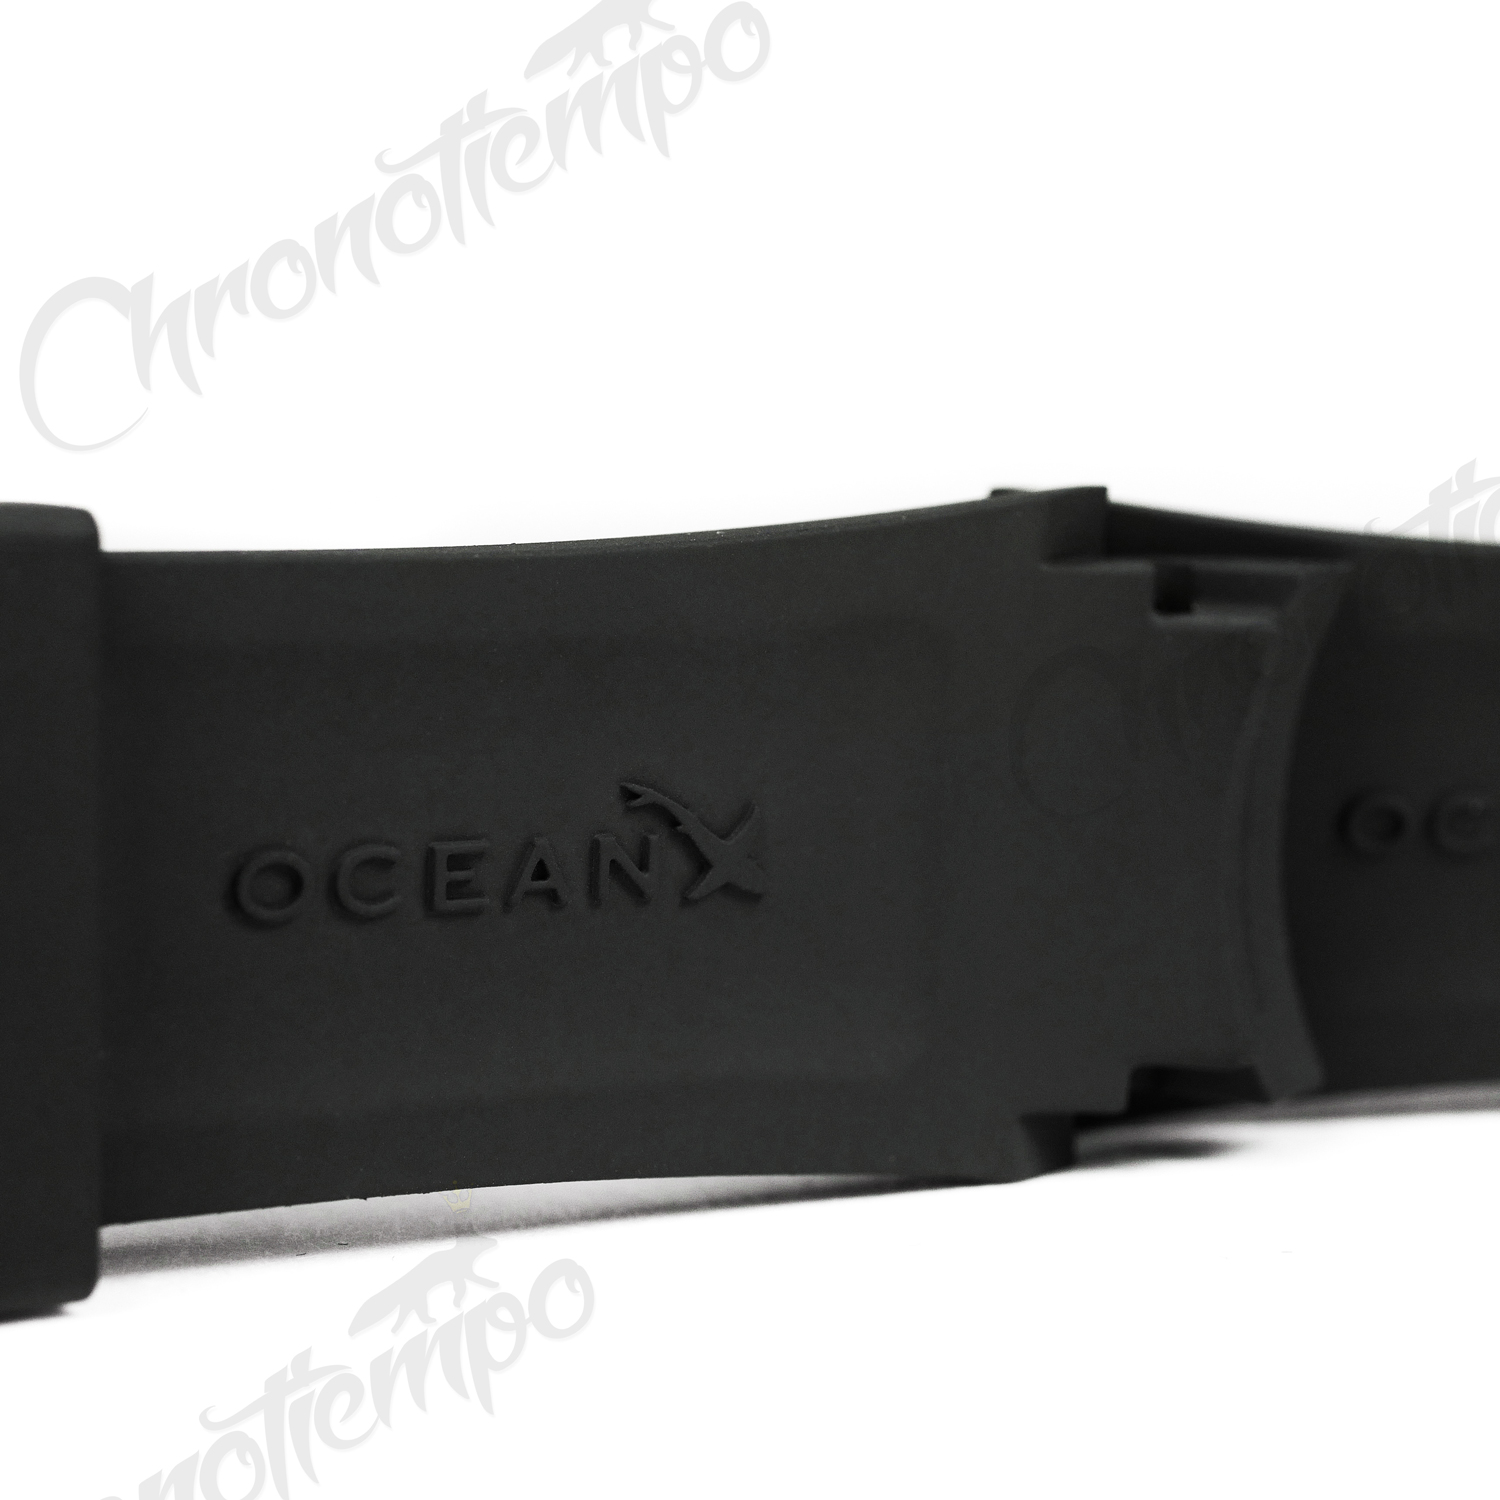 OceanX 21mm Black Rubber Strap for Sharkmaster 1000,M9,300+,bronze,bronze m9,600 44mm - Click Image to Close